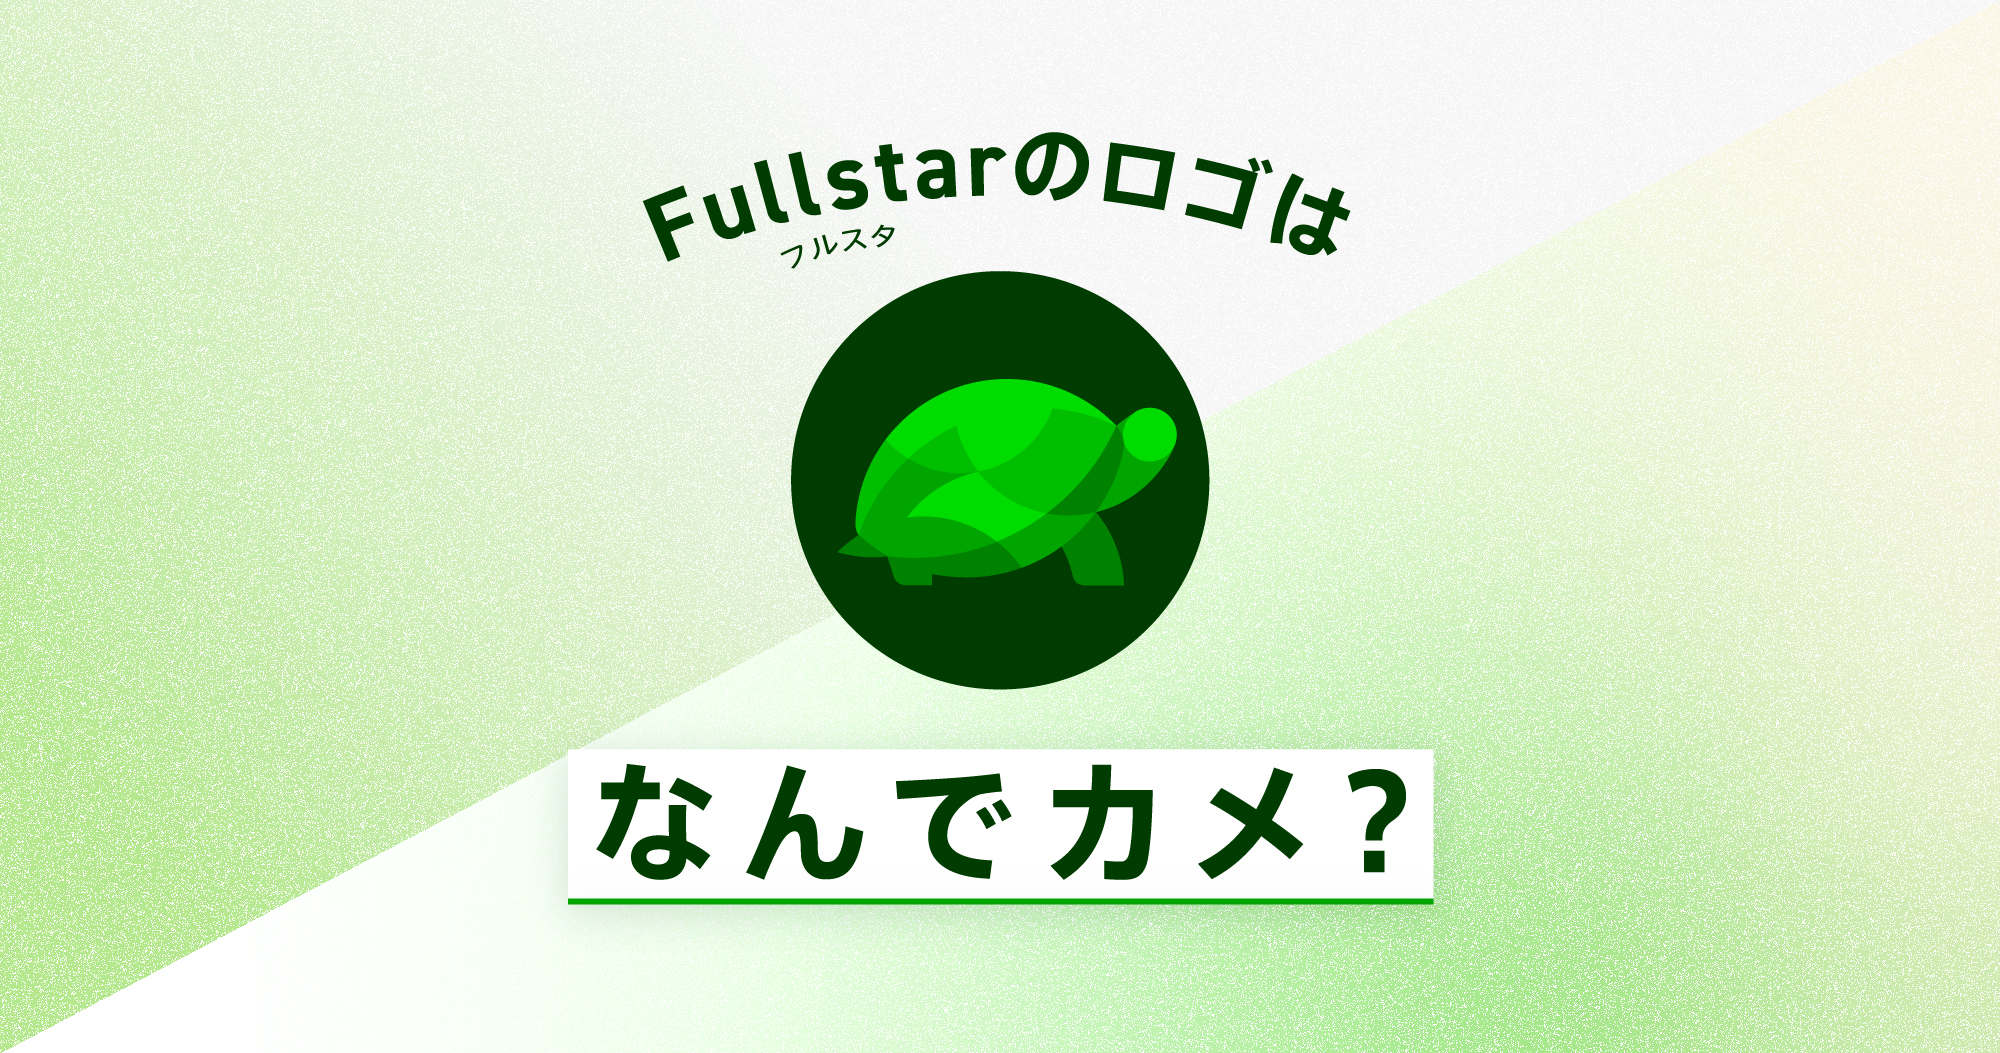 Fullstar（フルスタ）のロゴはなぜカメなのか？由来のご紹介